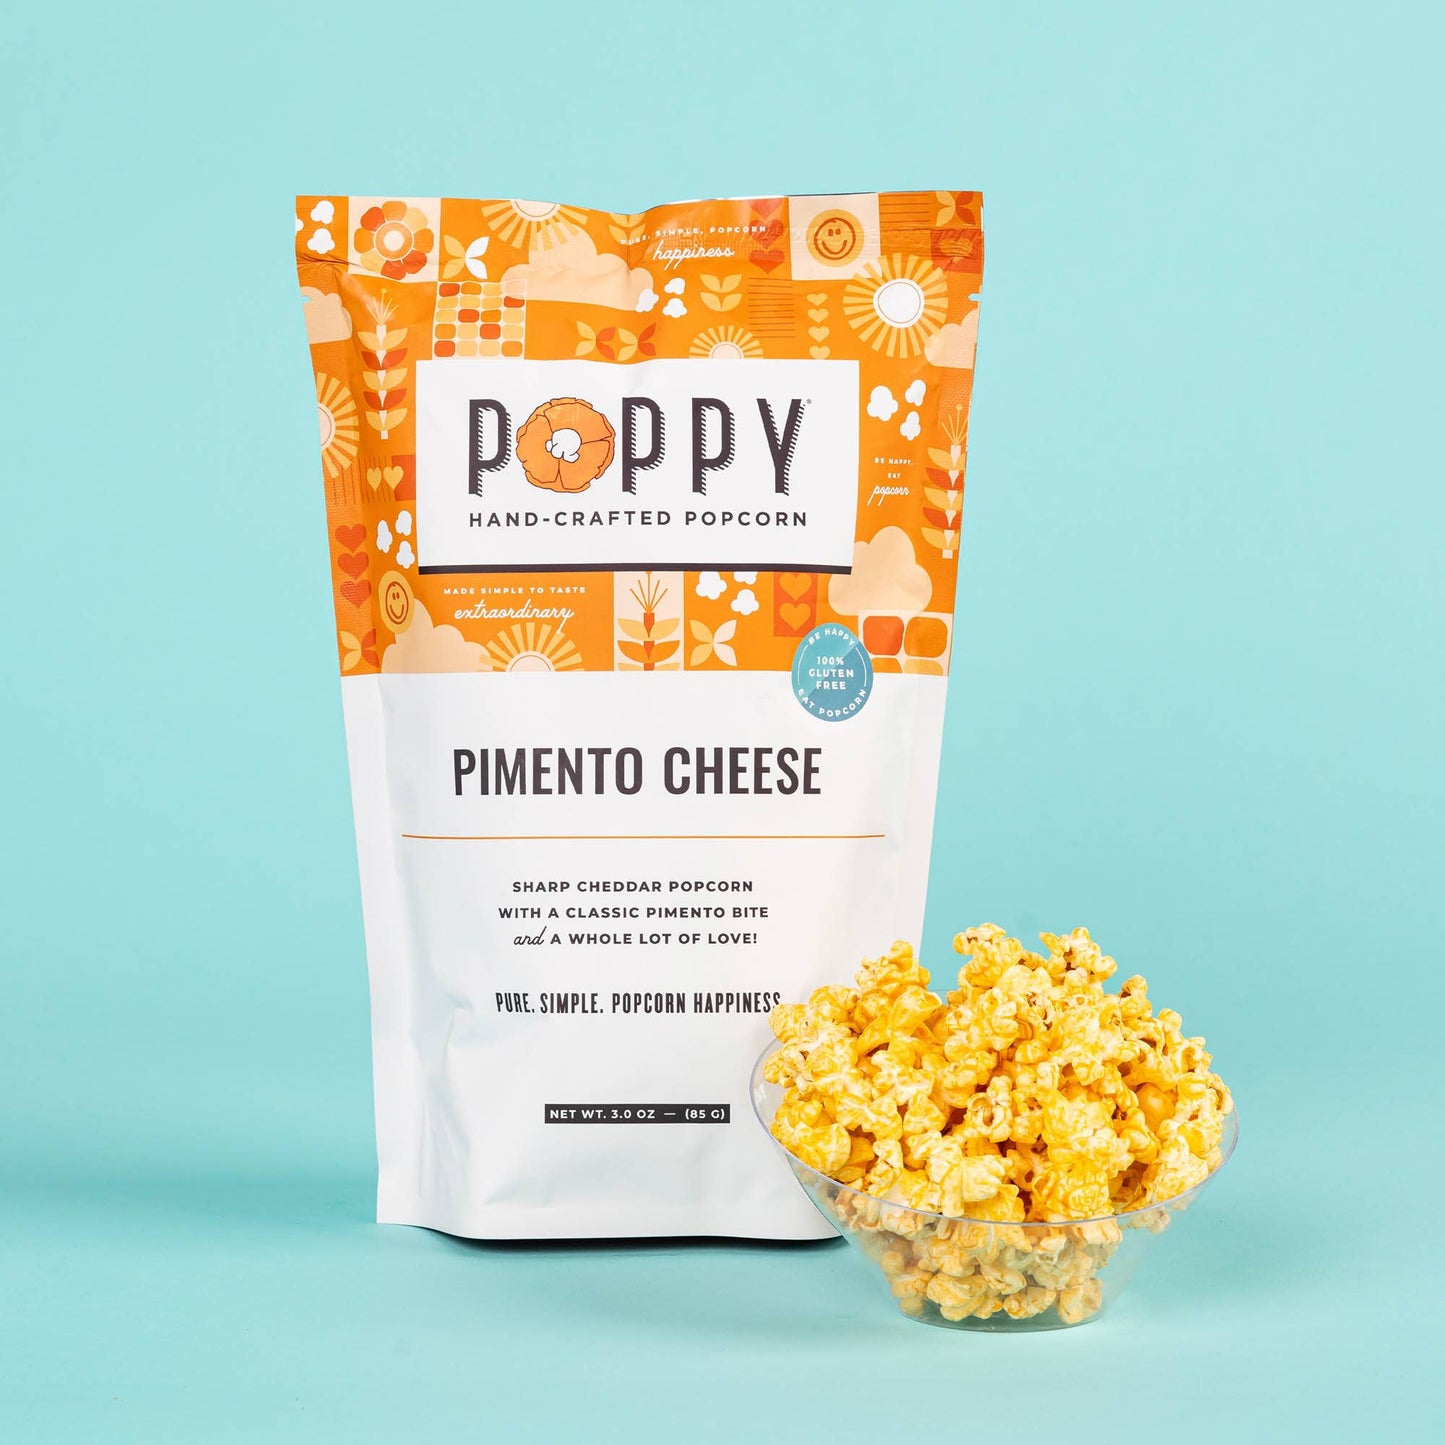 Poppy Hand-Crafted Popcorn - Pimento Cheese Popcorn